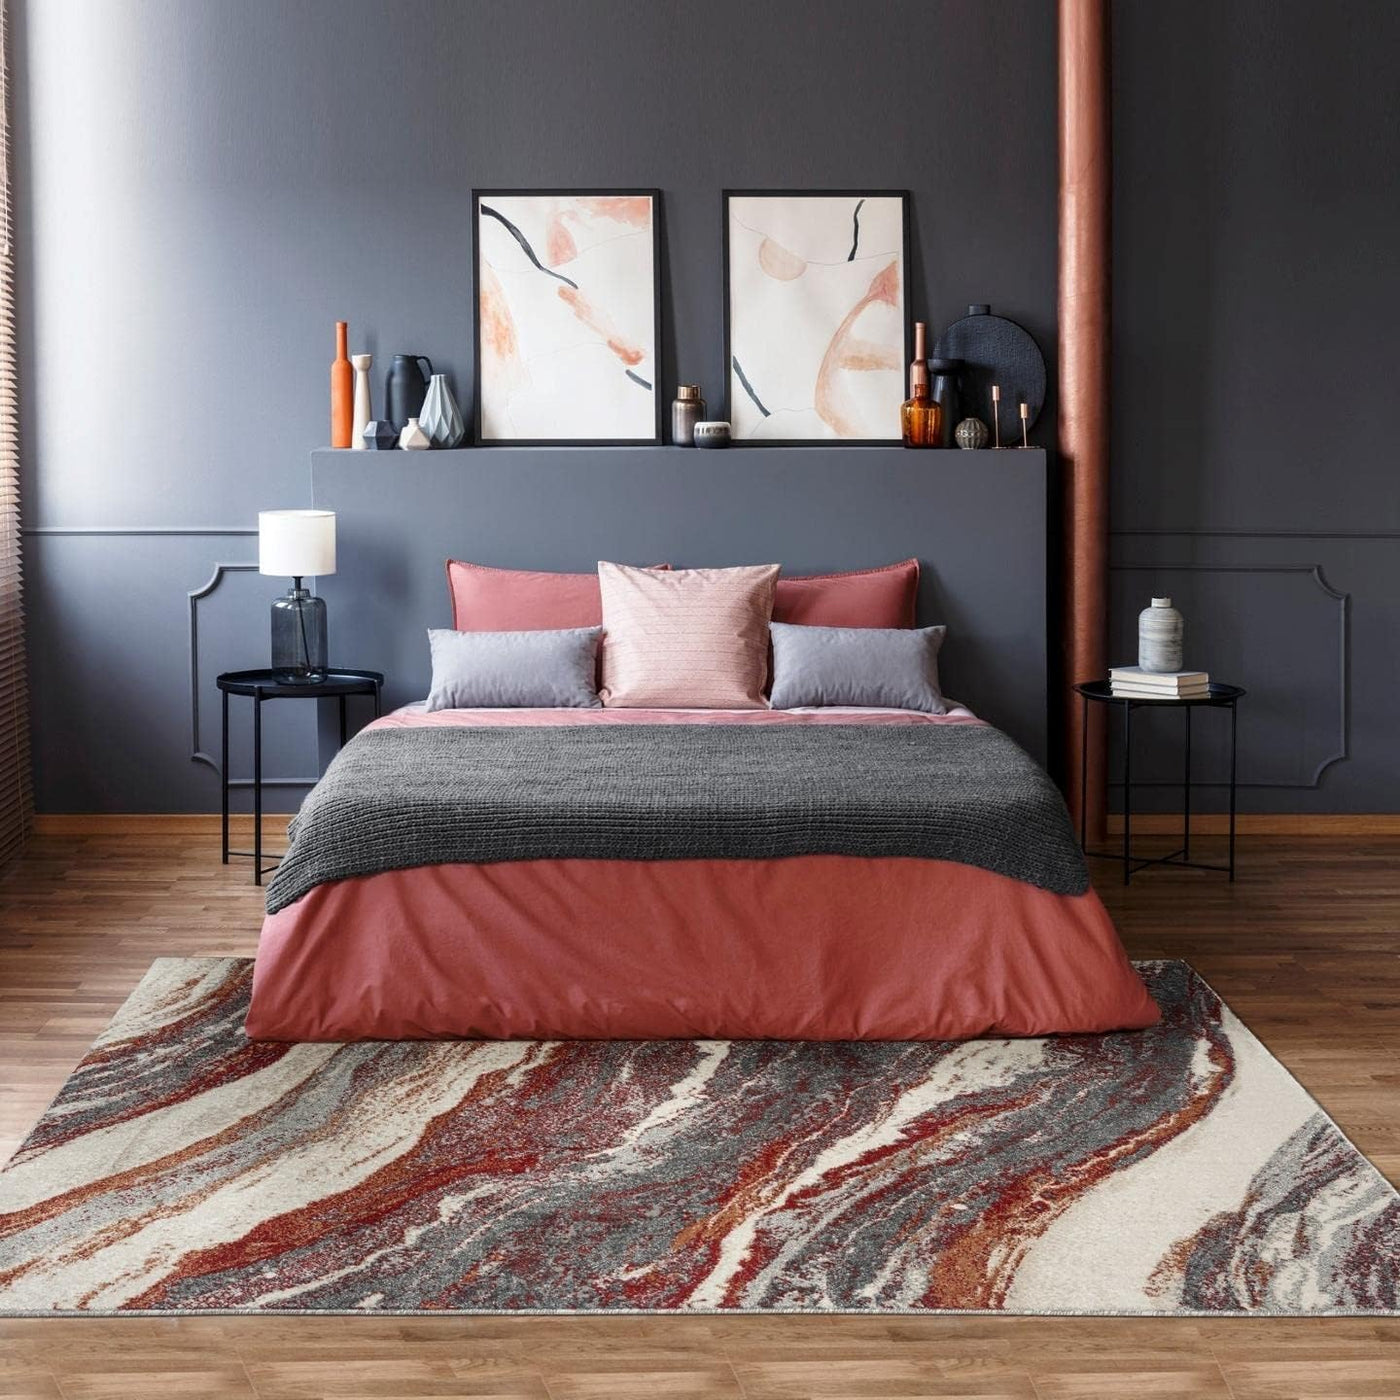 Ishro Home Premium Italian Carpets for Living Room/Bedroom/Home, Waterproof and Anti-Skid